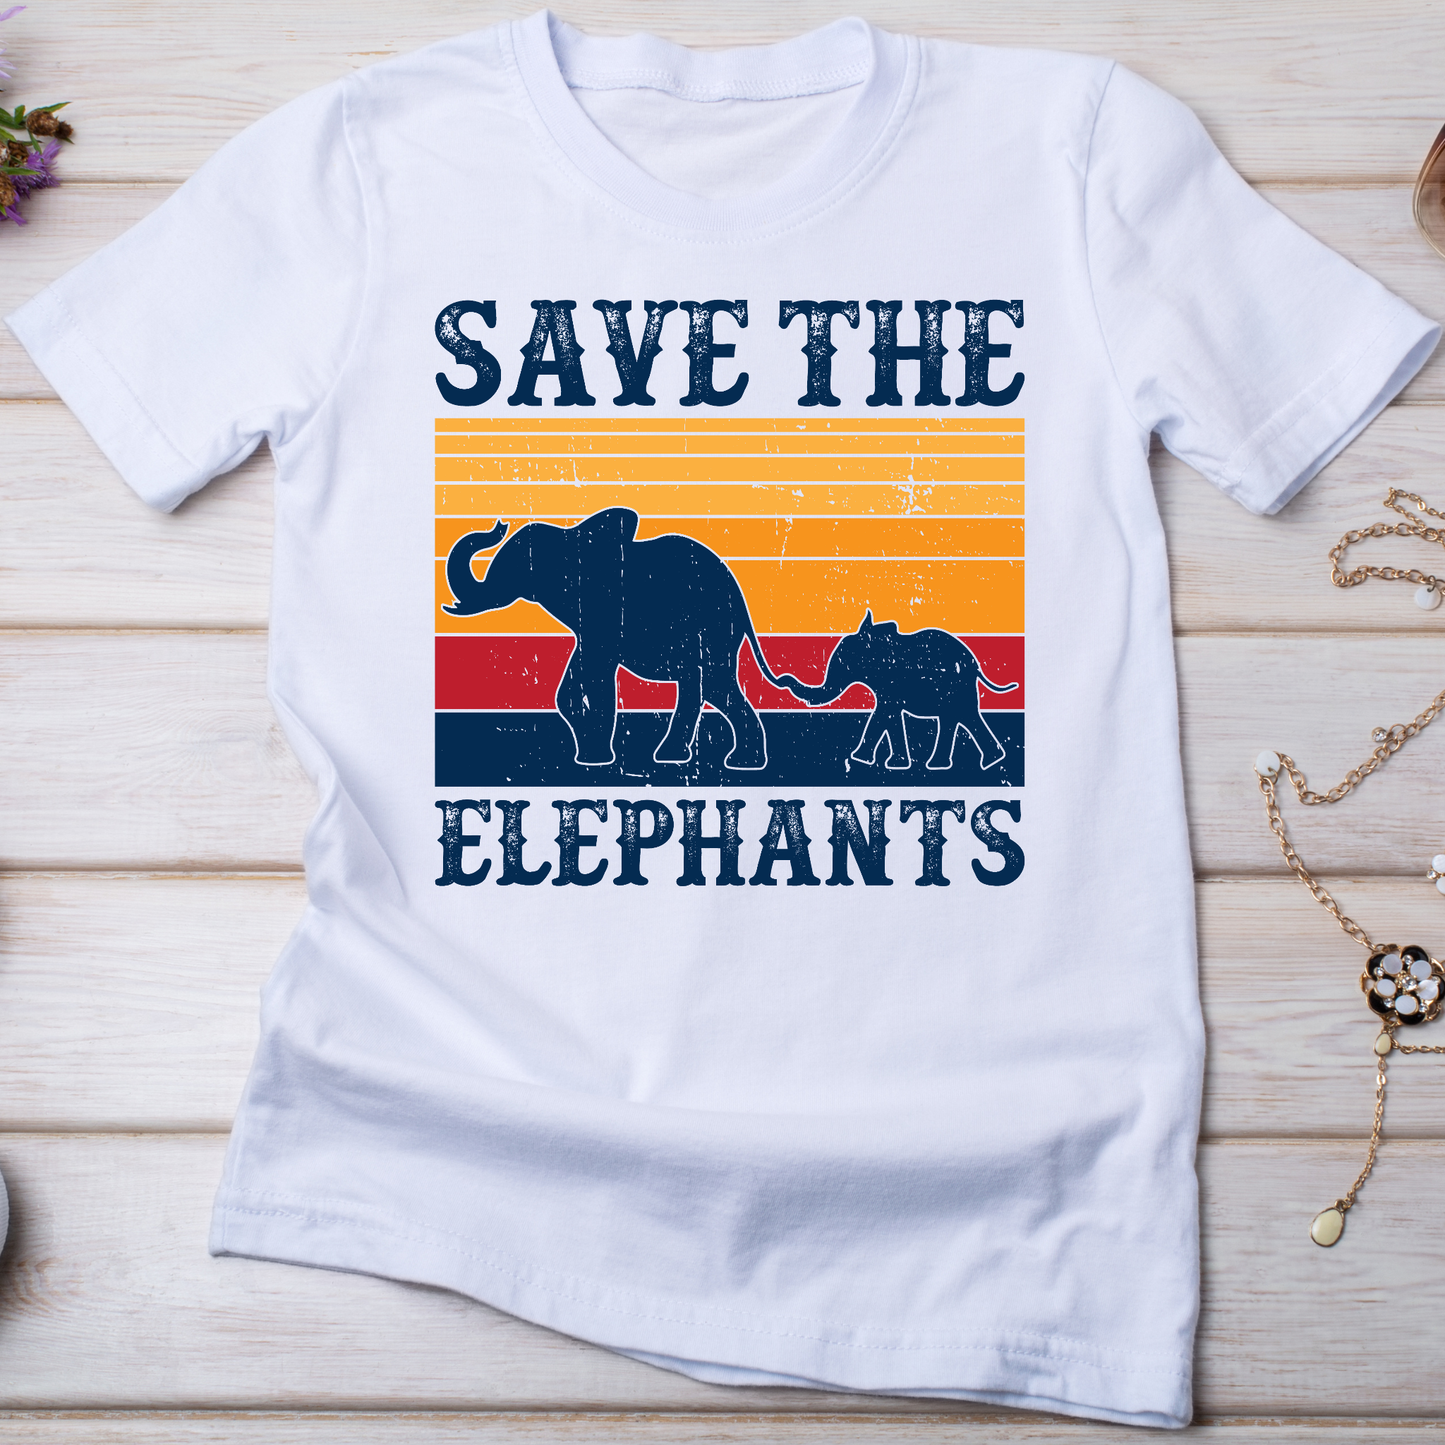 Save the elephants Women's vegan t-shirt - Premium t-shirt from Lees Krazy Teez - Just $19.95! Shop now at Lees Krazy Teez